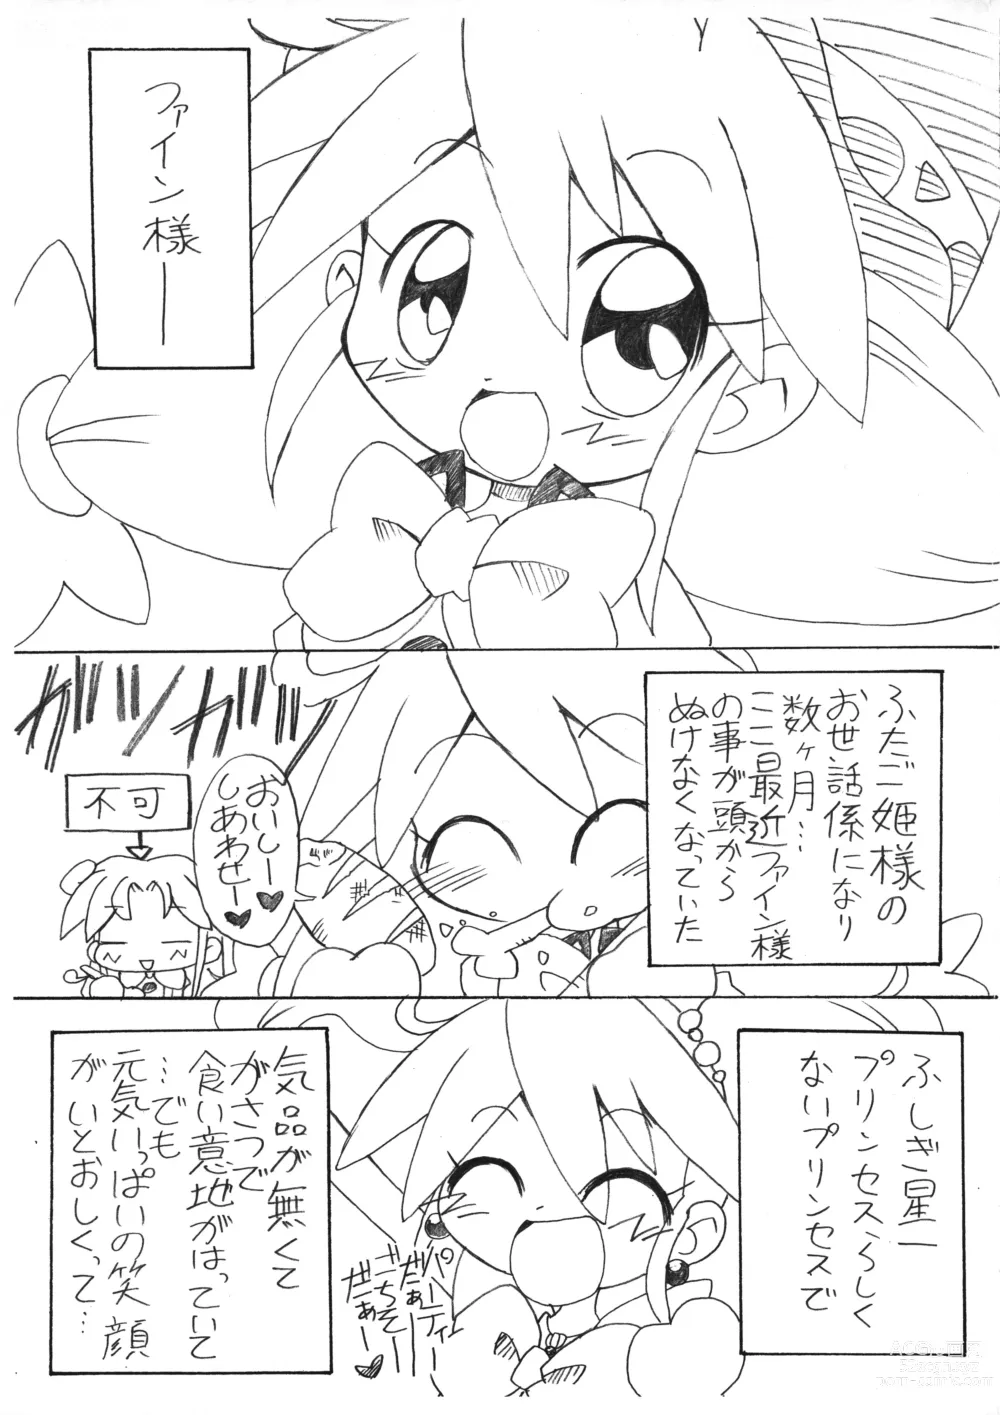 Page 2 of doujinshi Ama Ama Fine-tan.